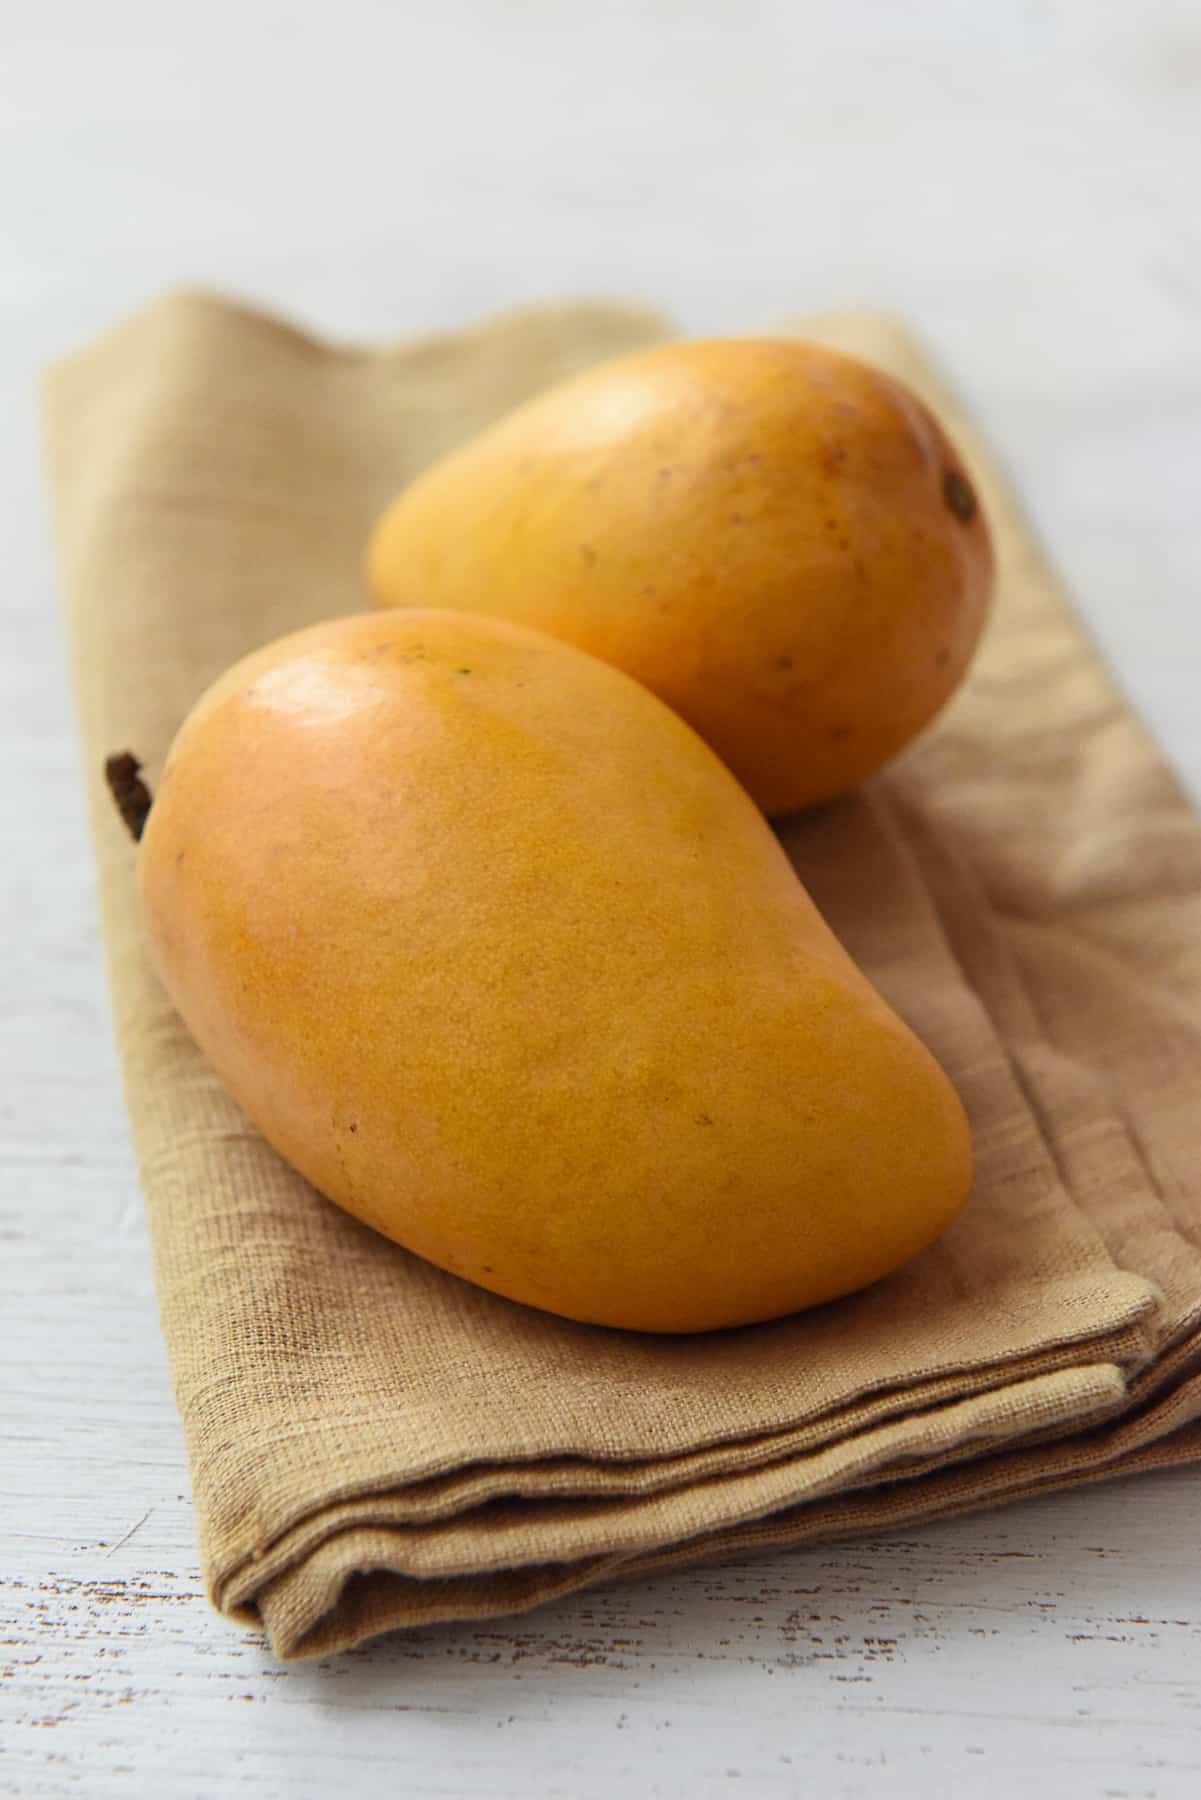 Thai Mango